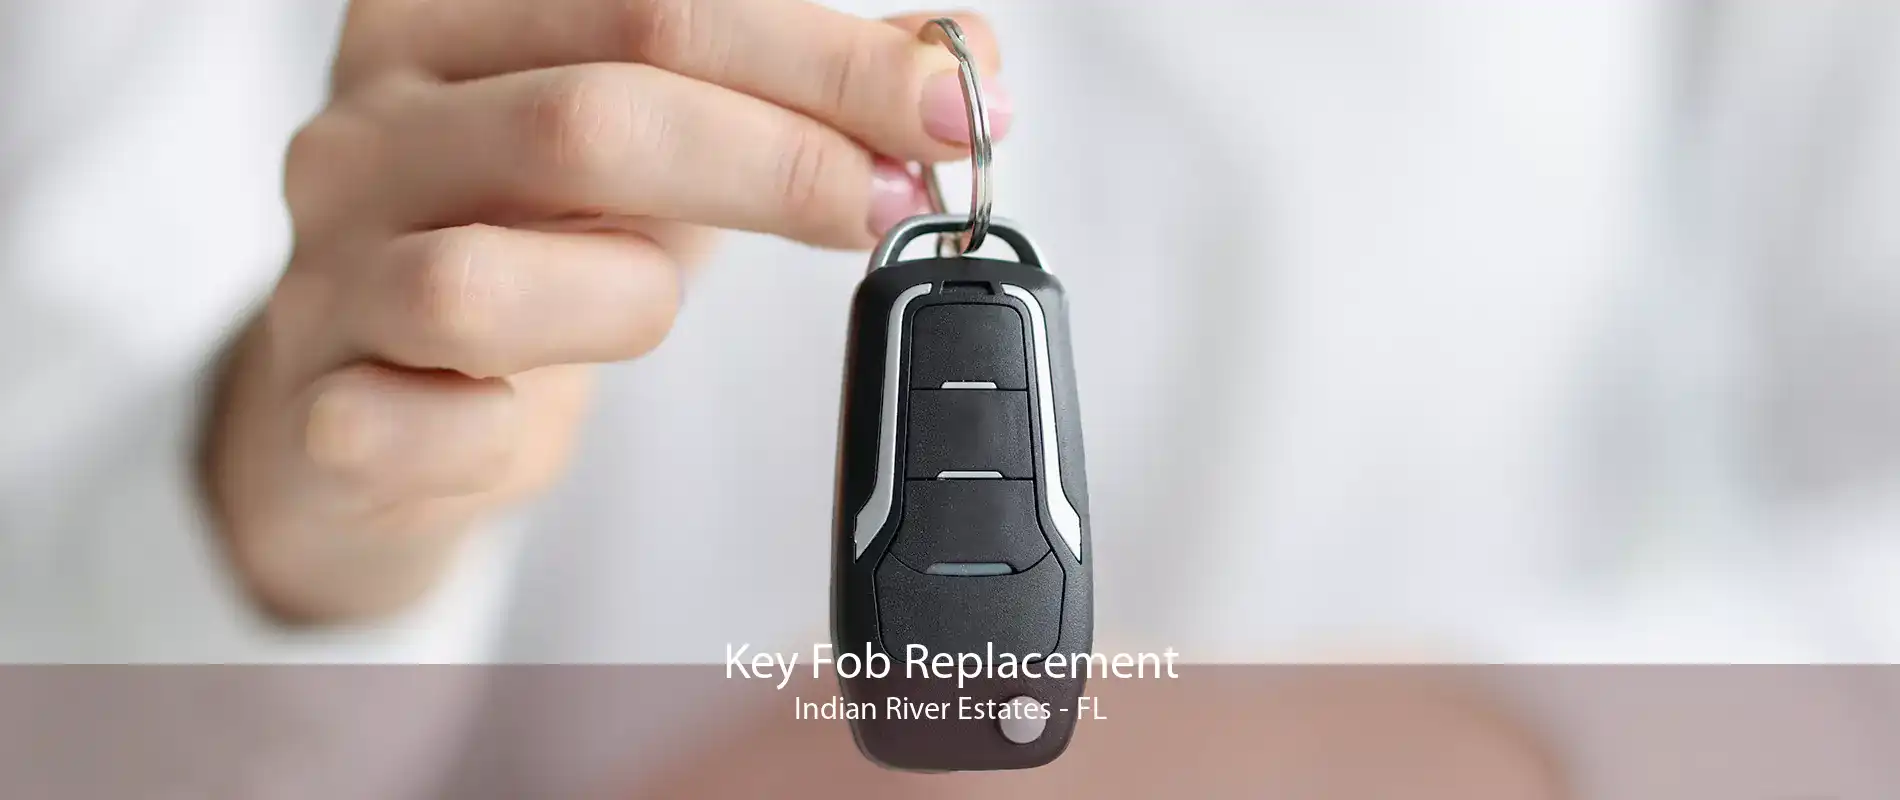 Key Fob Replacement Indian River Estates - FL